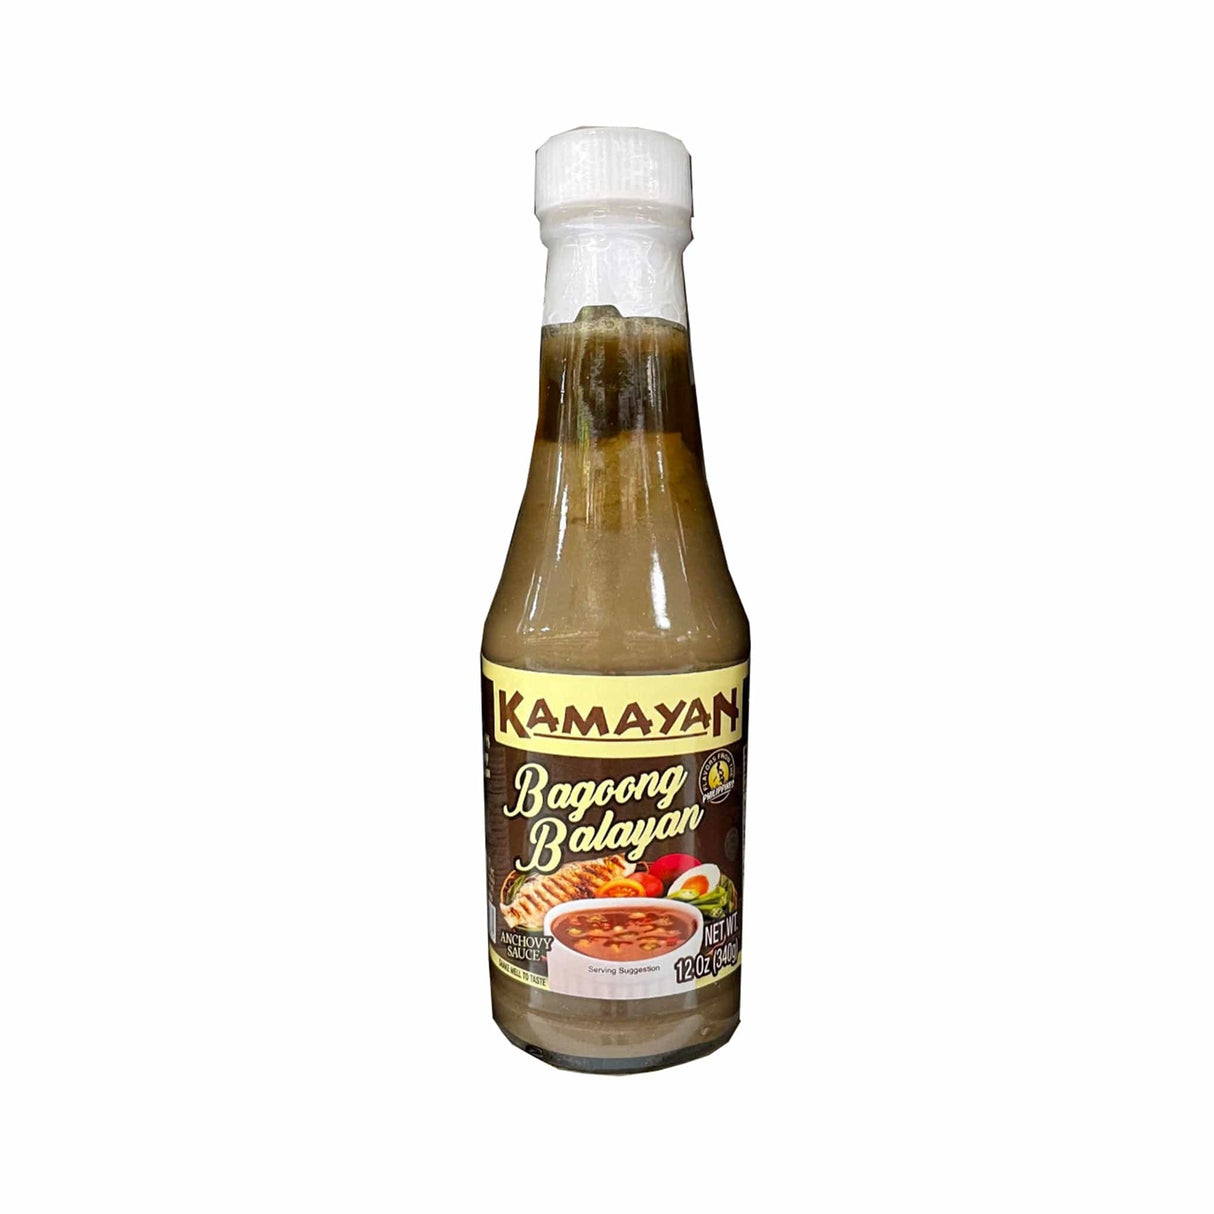 Kamayan Anchovy Sauce (Bagoong Balayan